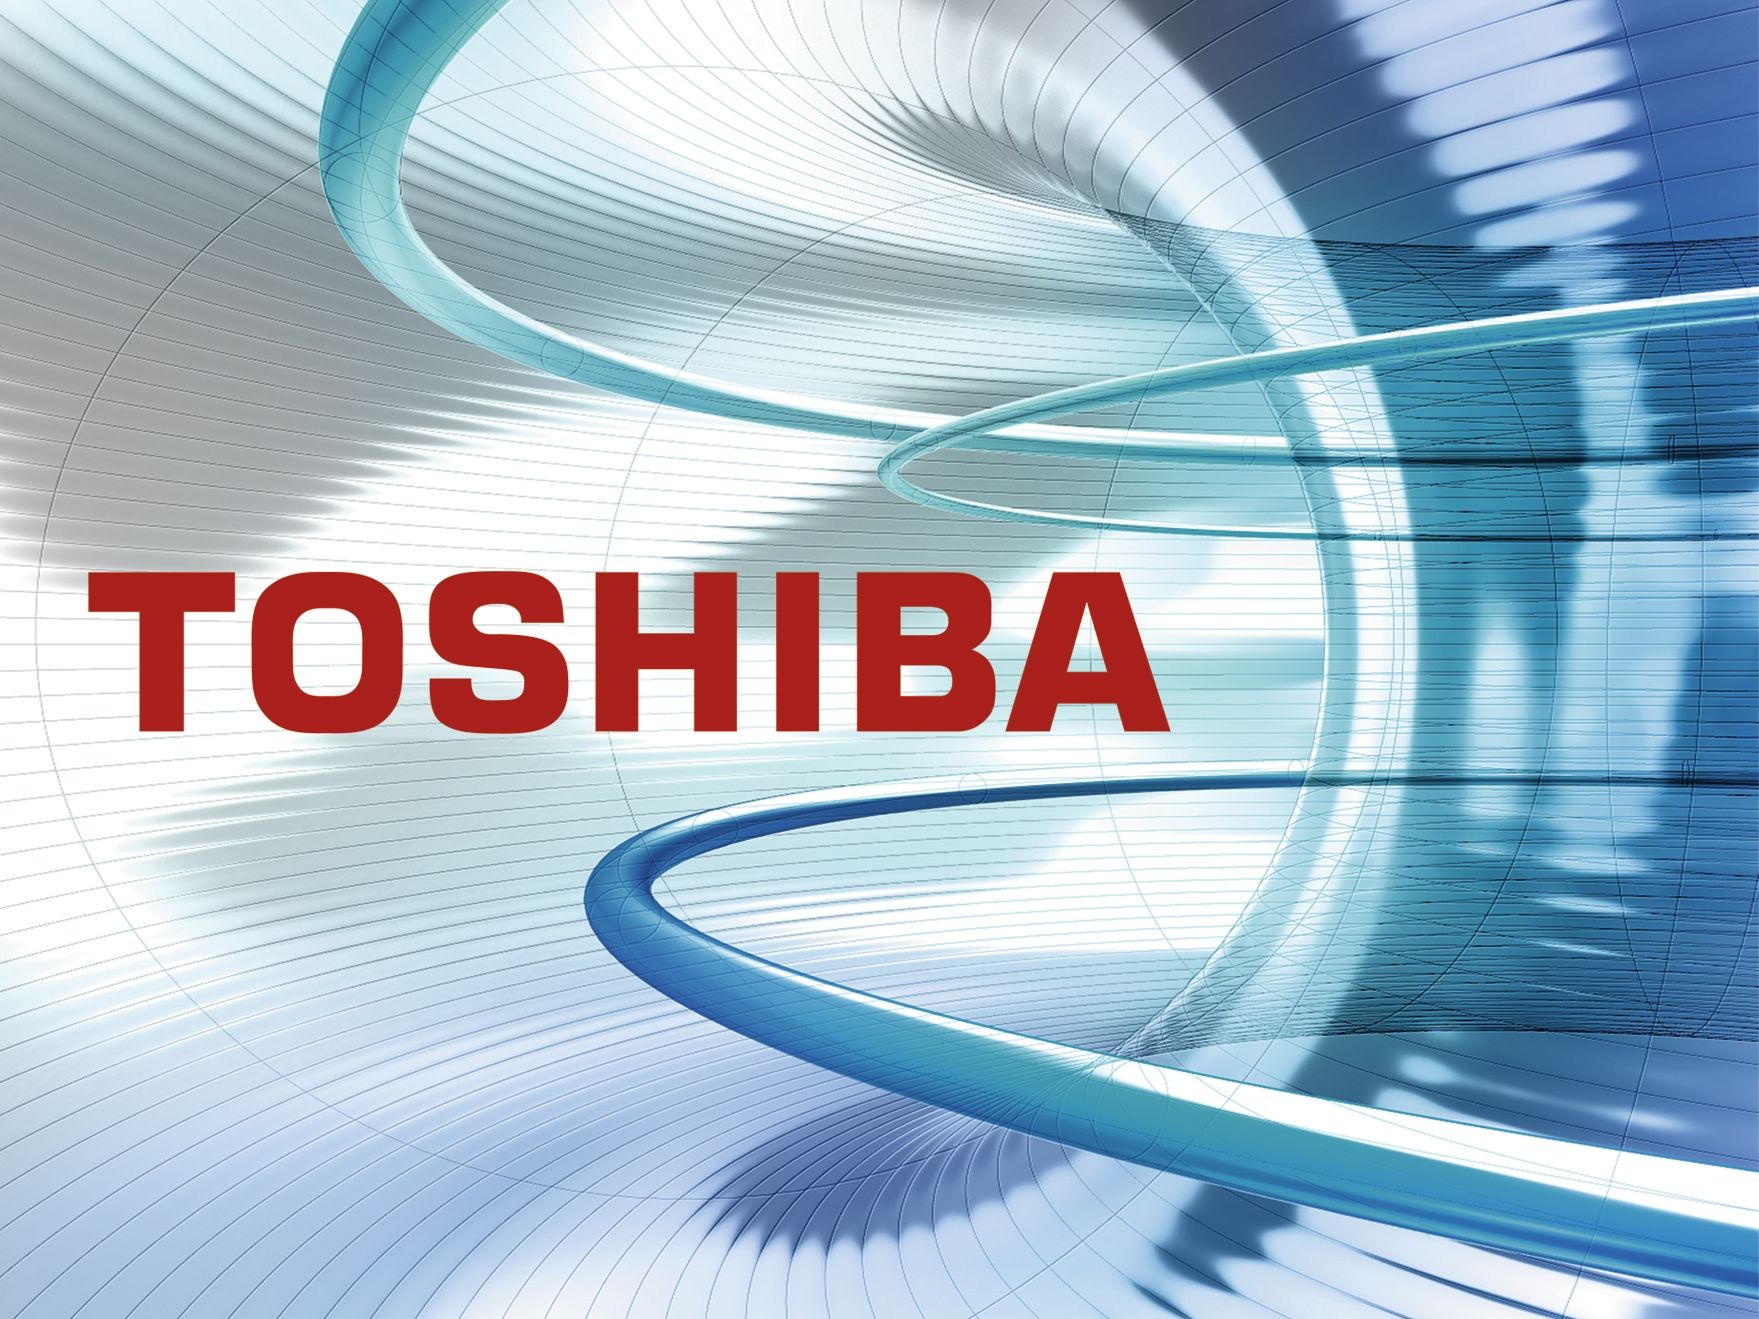 Toshiba Computer Wallpapers, Desktop Backgrounds 1759x1319 ID